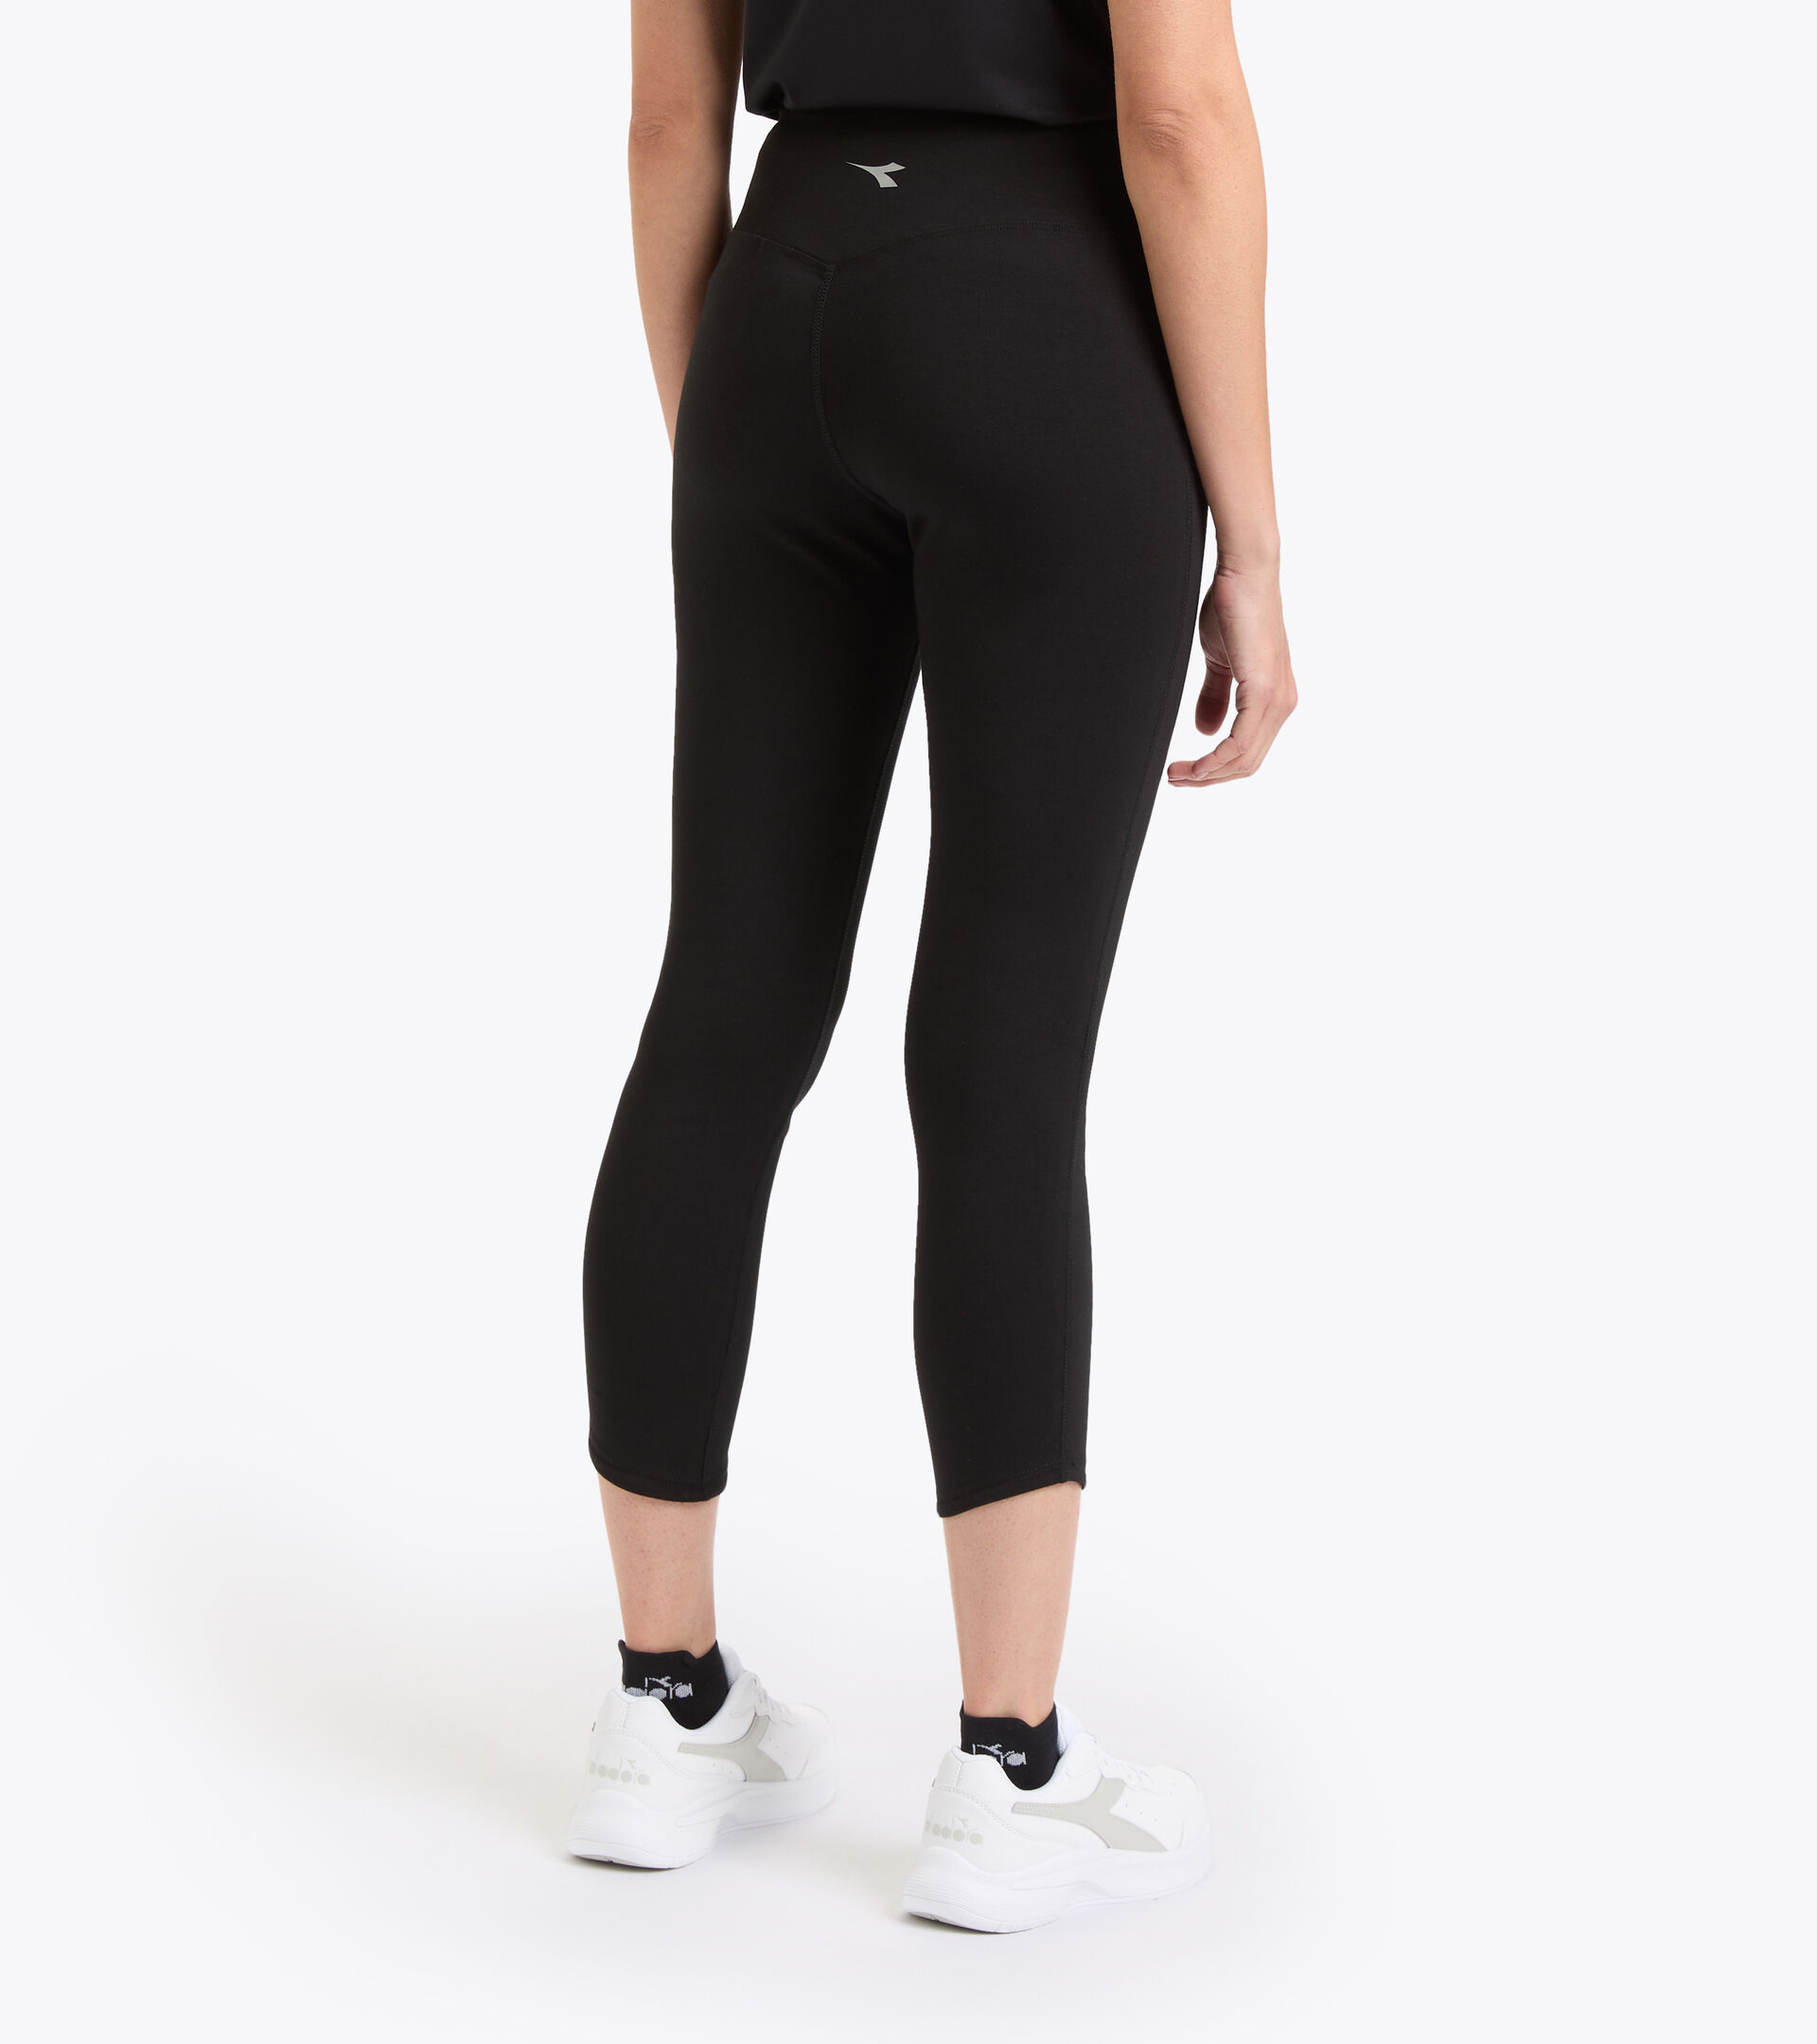 L. 3/4 TIGHTS BE ONE Running leggings - Women - Diadora Online Store US